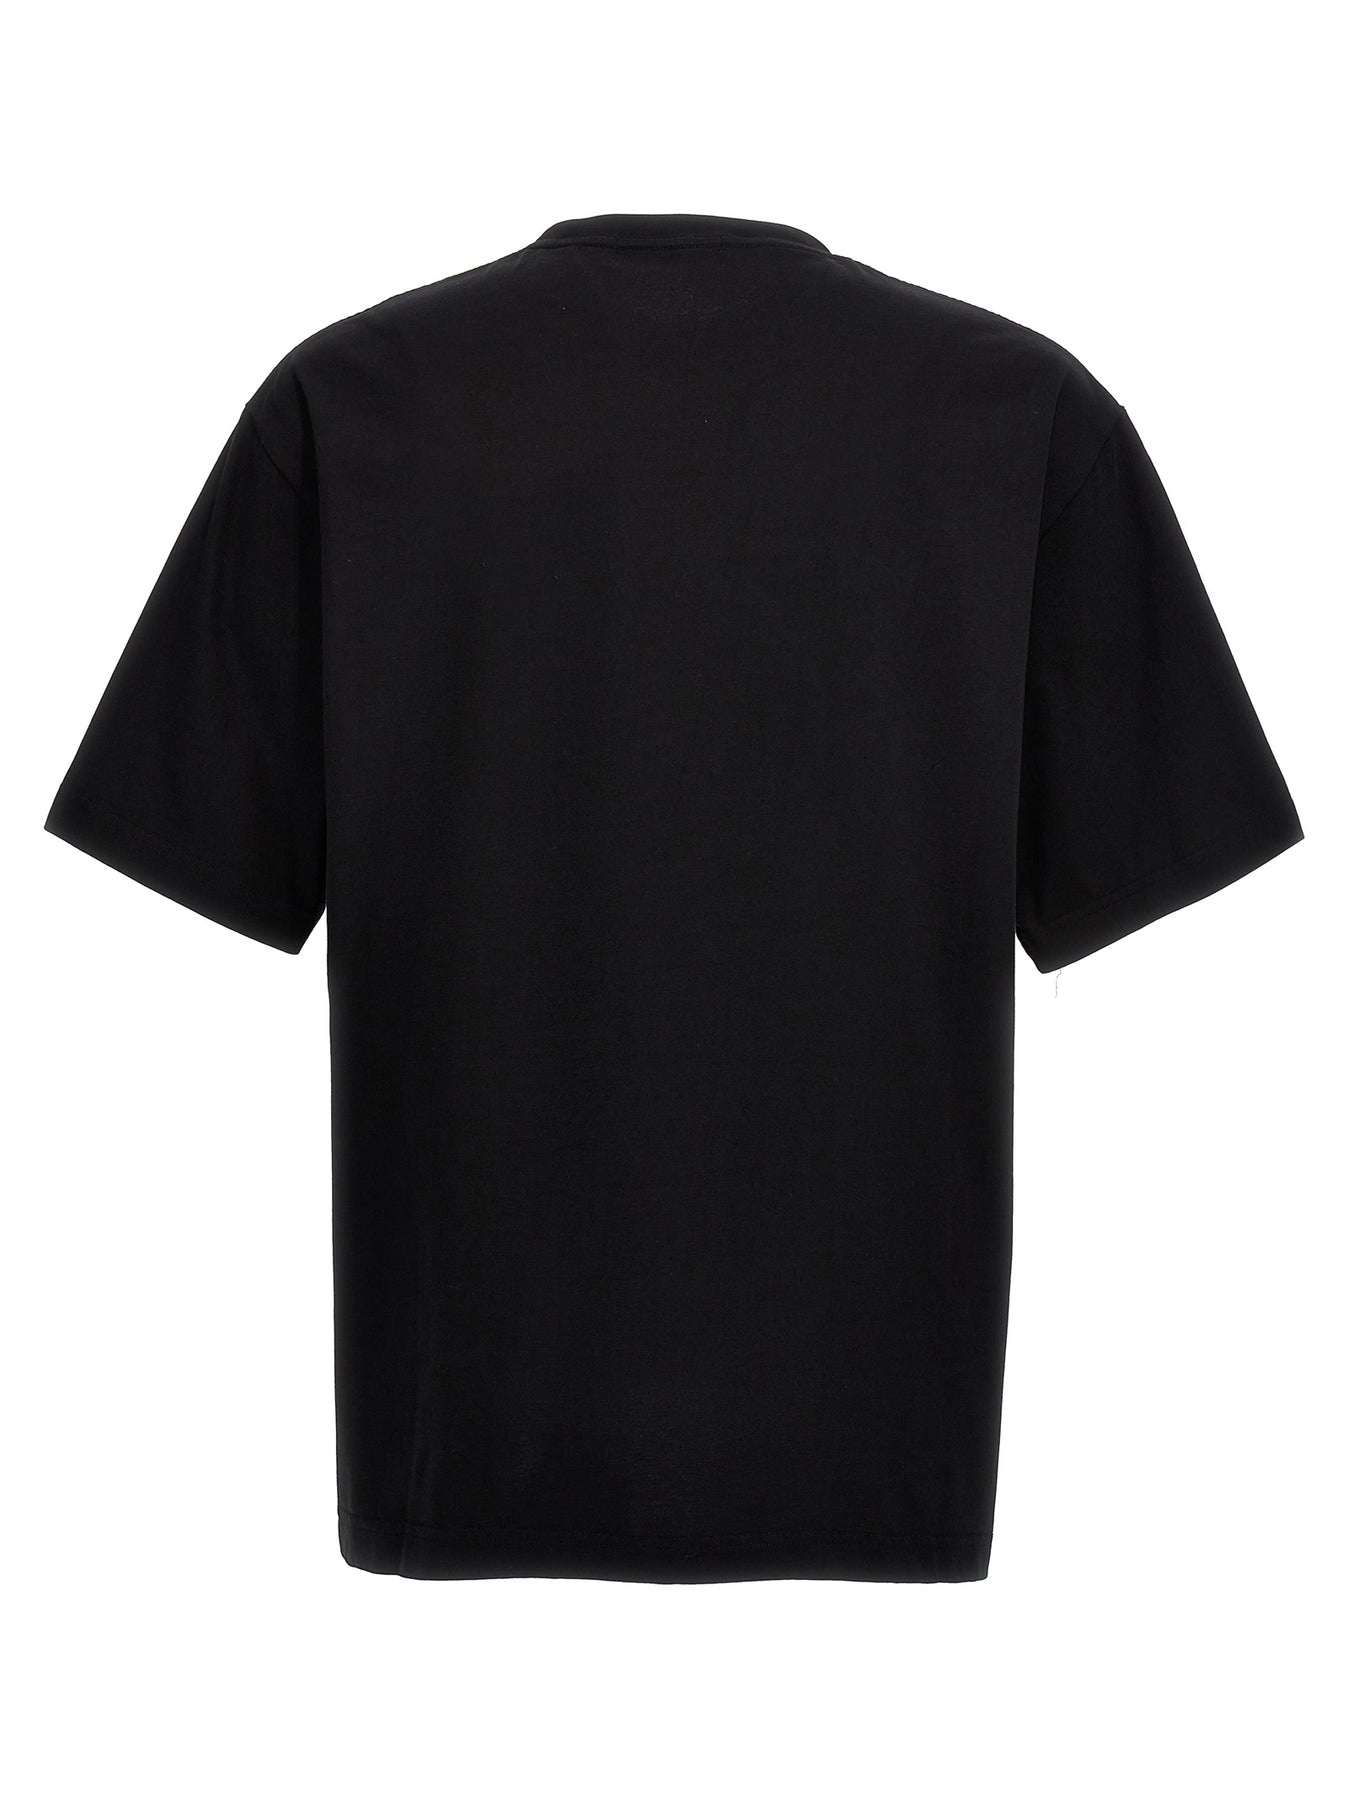 New Multicord T-Shirt Black - 2